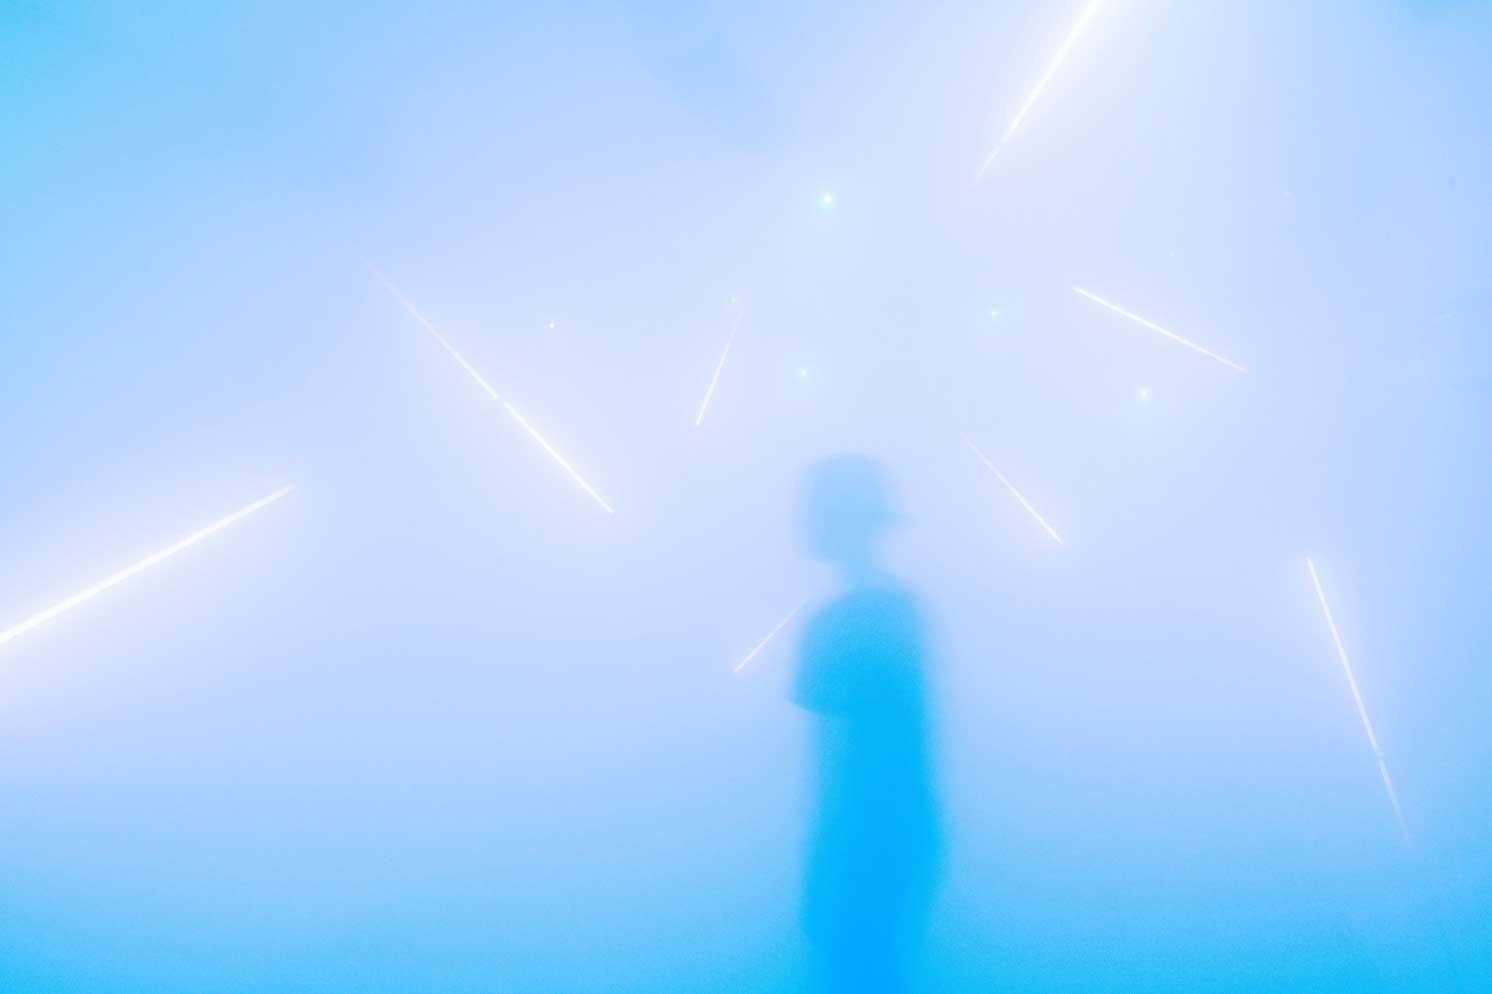 Ambient Kyoto 2023 -』にてシルキーファインミストを使用した展示『霧中夢 -Dream in the Mist-』  | Make New Magazine「未来の定番」をつくるために、パナソニックのリアルな姿を伝えるメディア